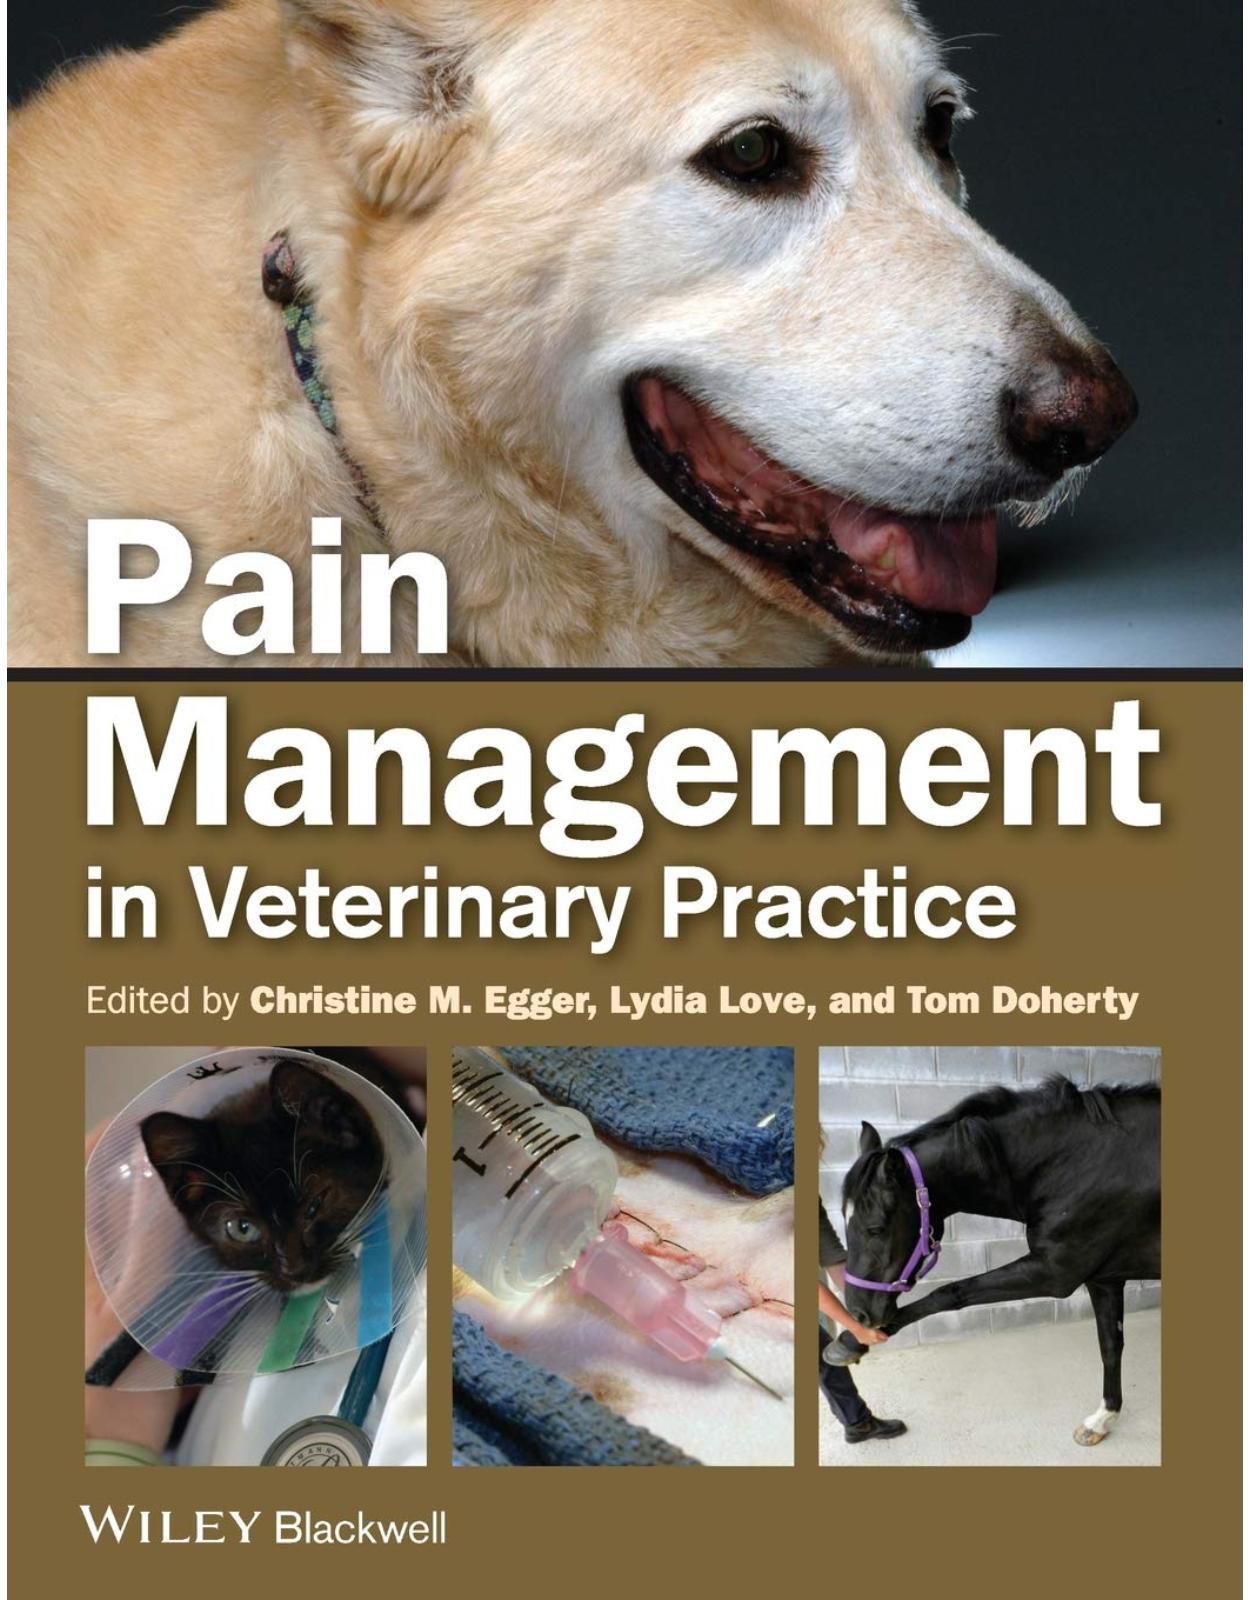 Pain Management in Veterinary Practice